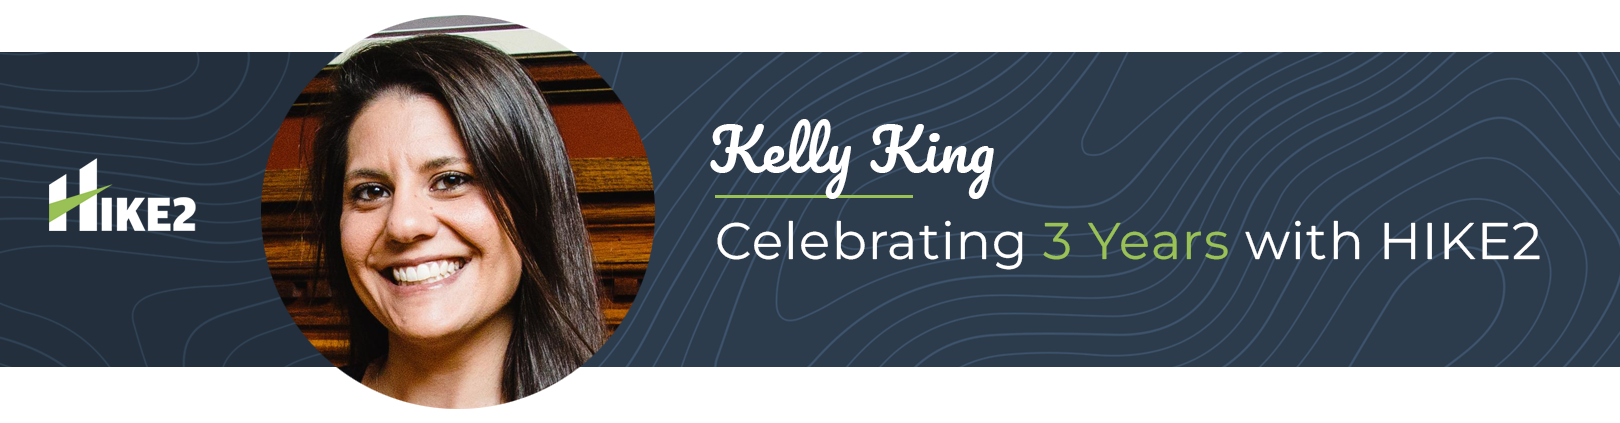 Kelly King celebrating 3 years at HIKE2